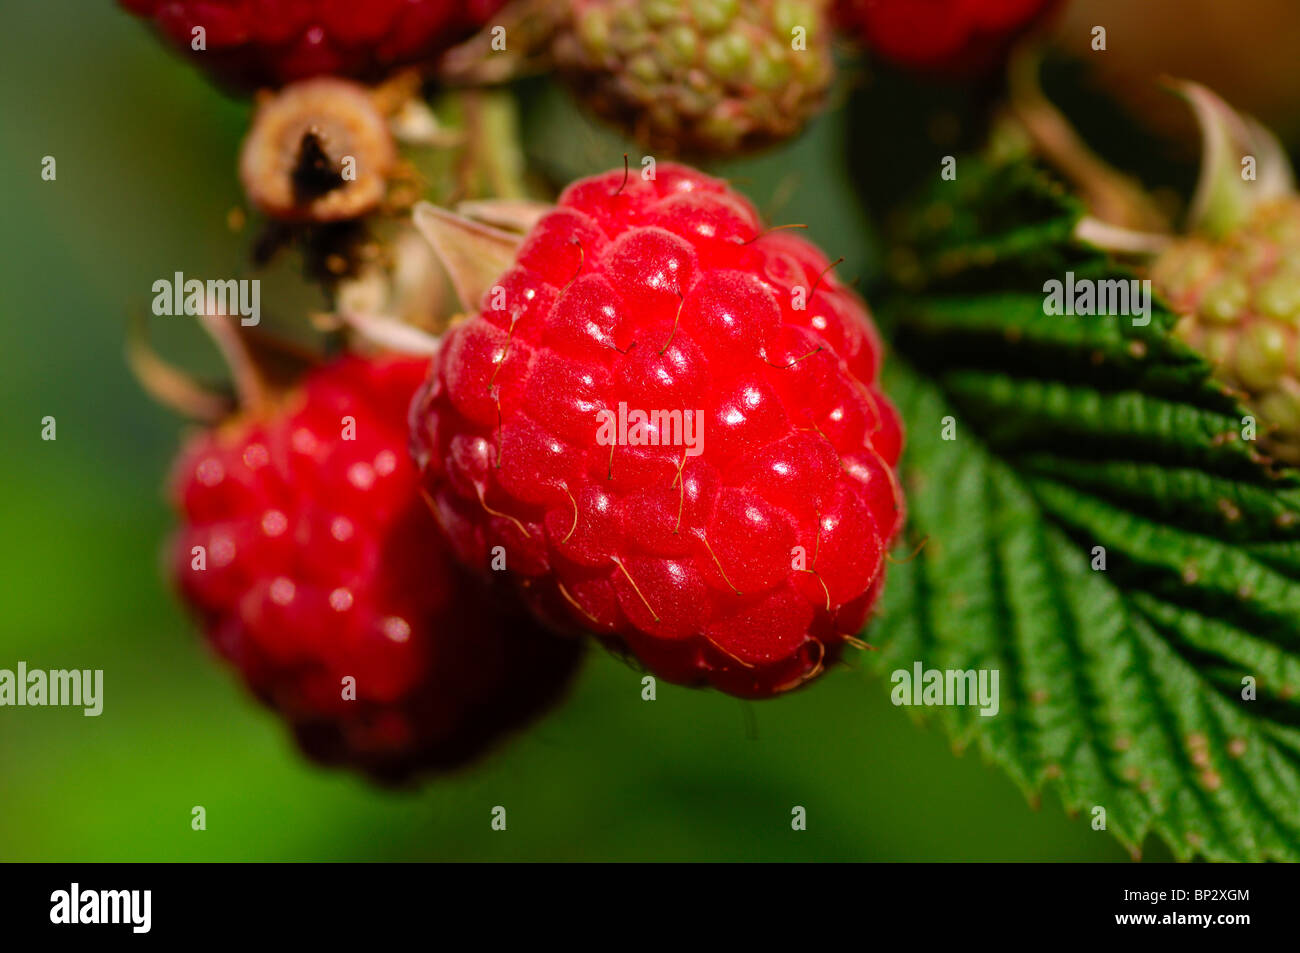 Ripe Raspberries (Rubus idaeus) on the stem Stock Photo